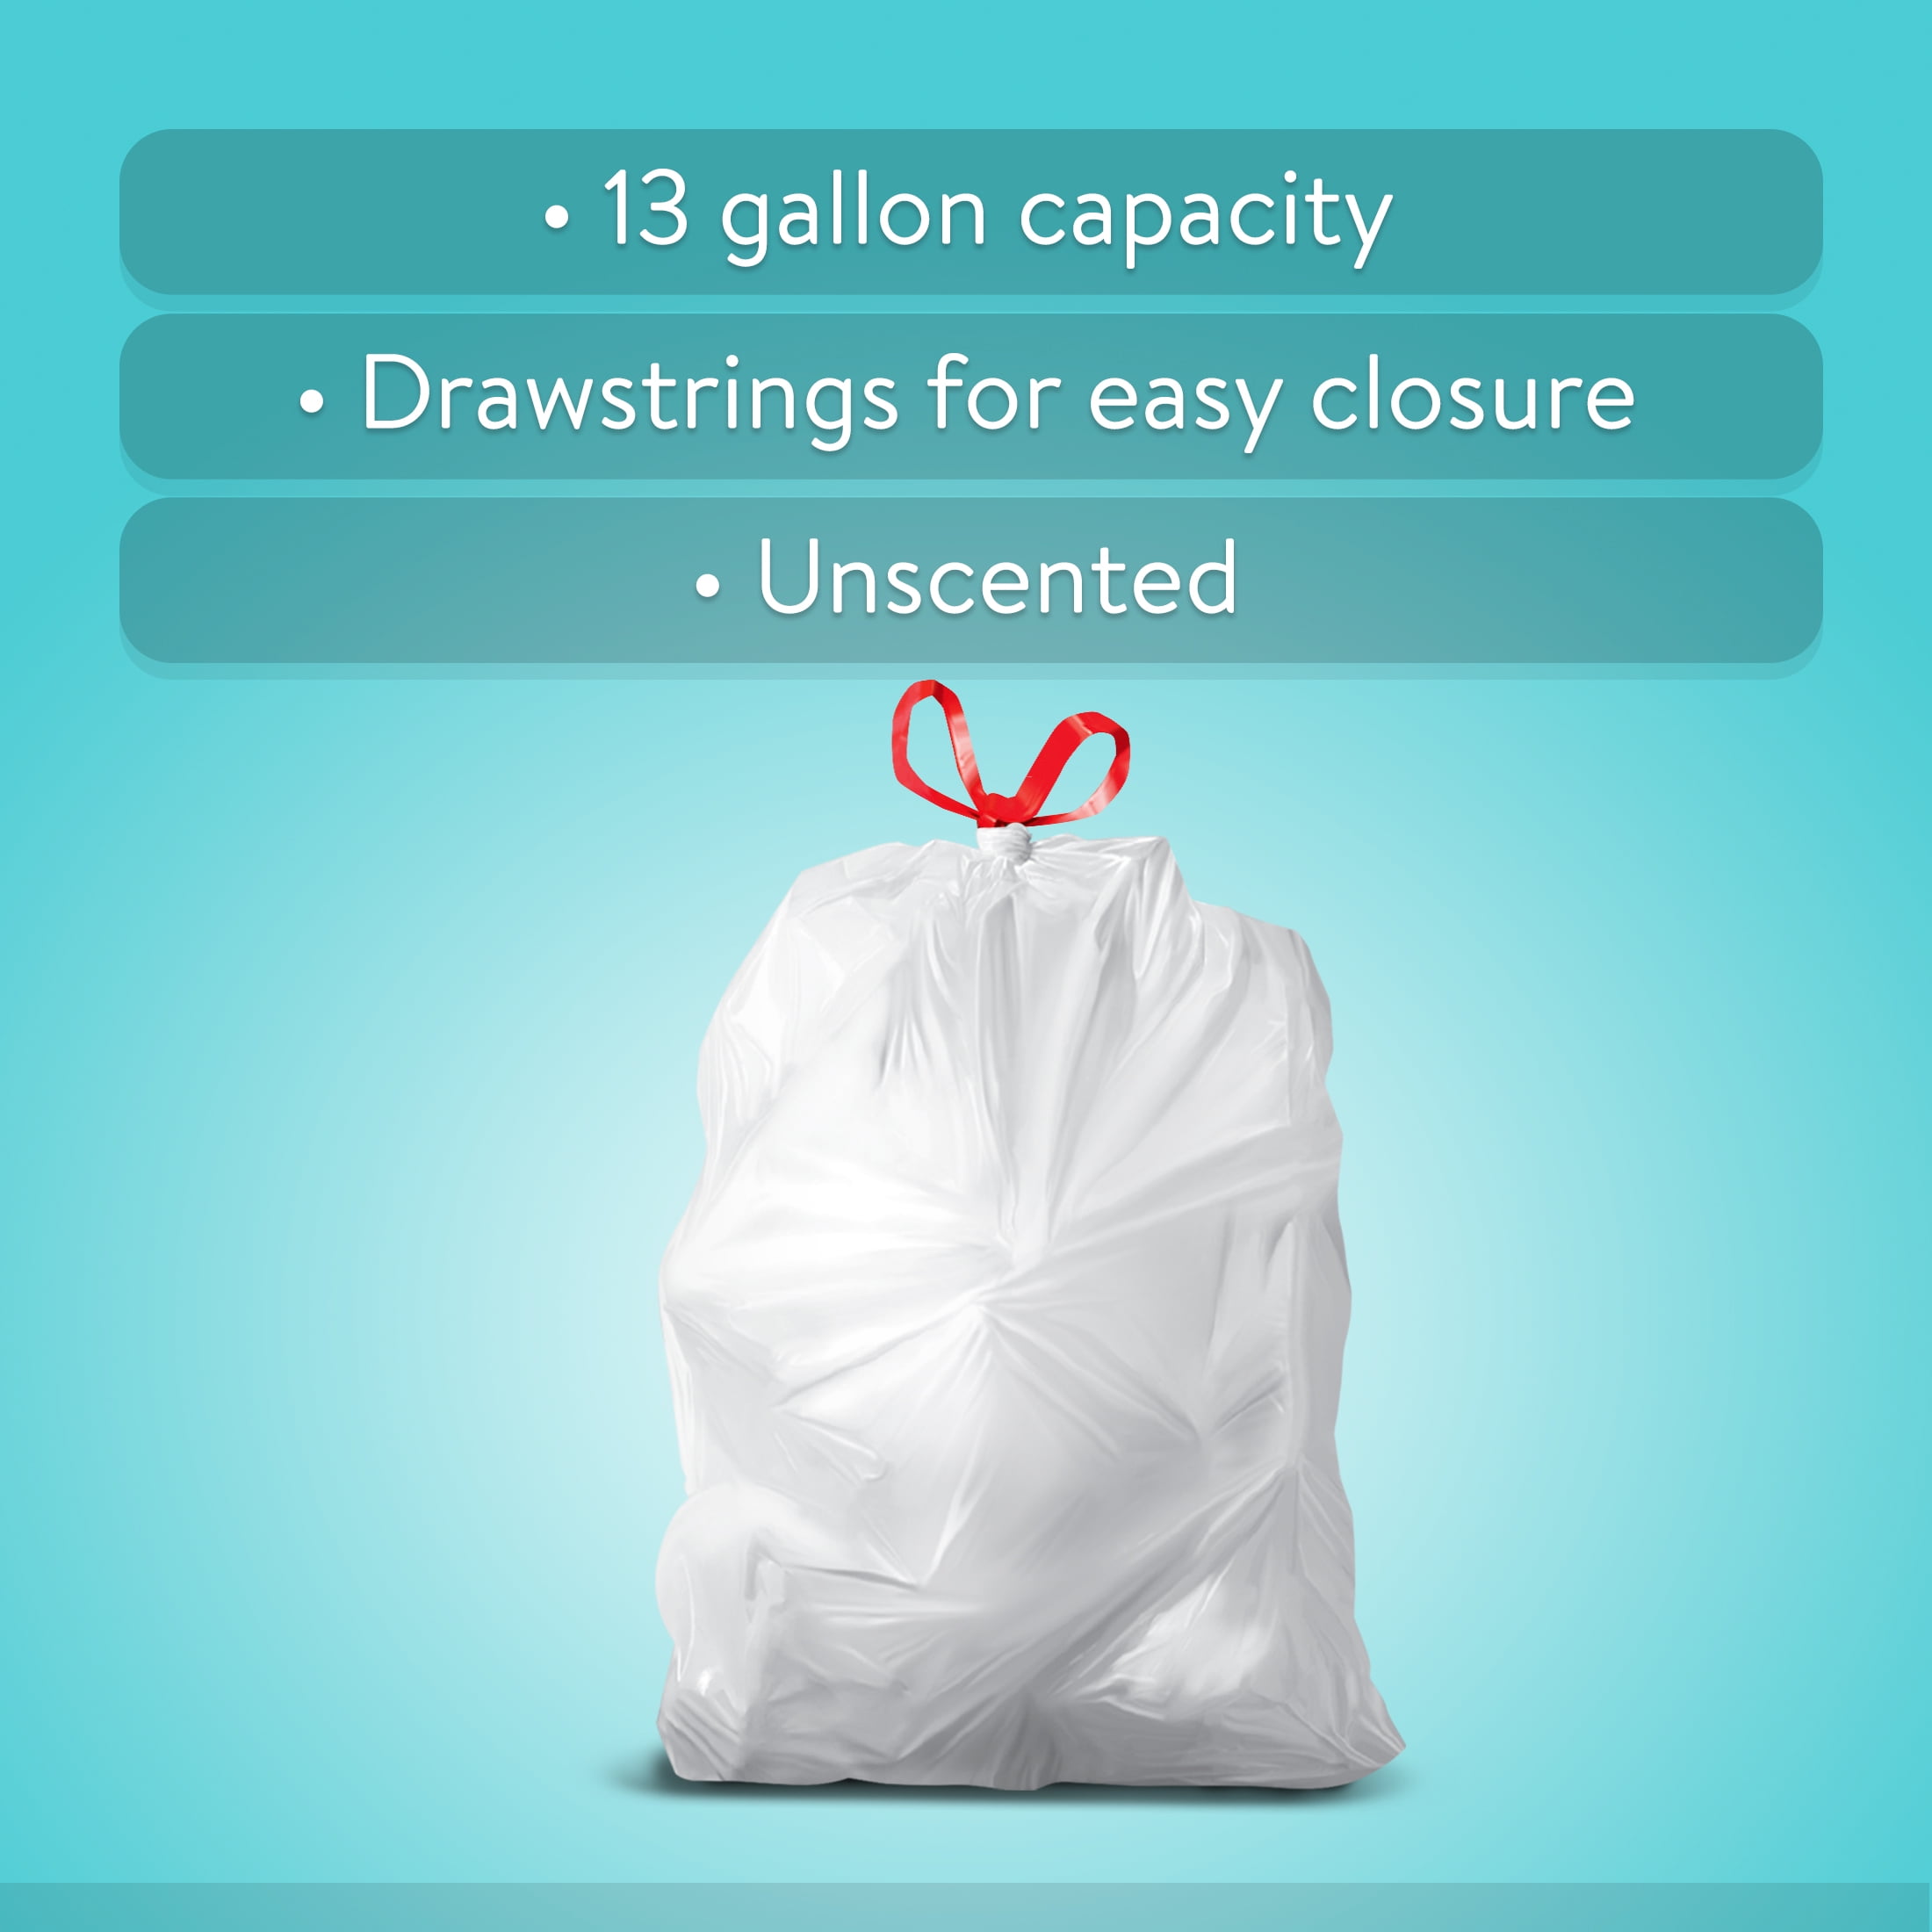 Basic Kitchen Trash Bags, 13 Gallon, Drawstring, 20 Bags 